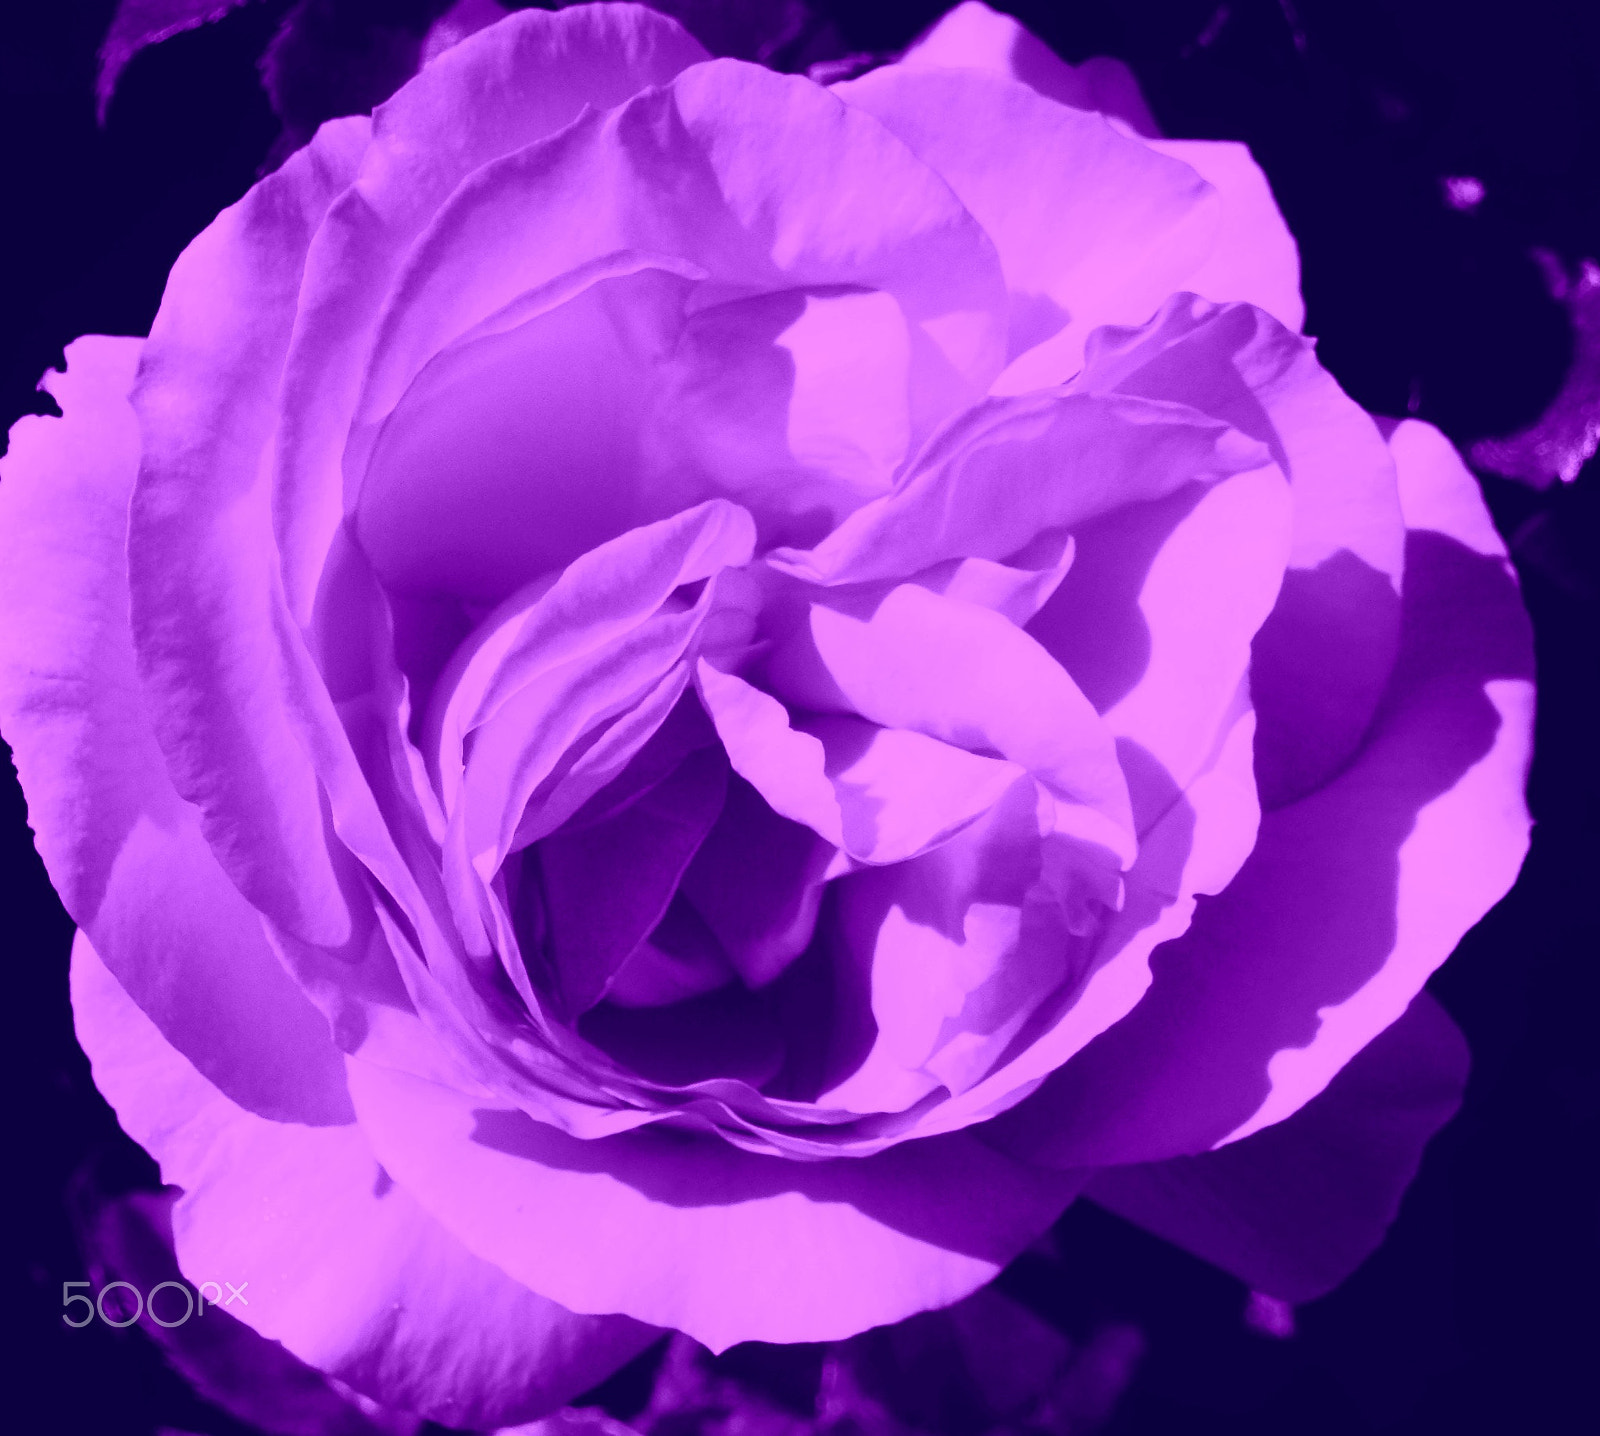 Olympus SZ-12 sample photo. Purple rose photography